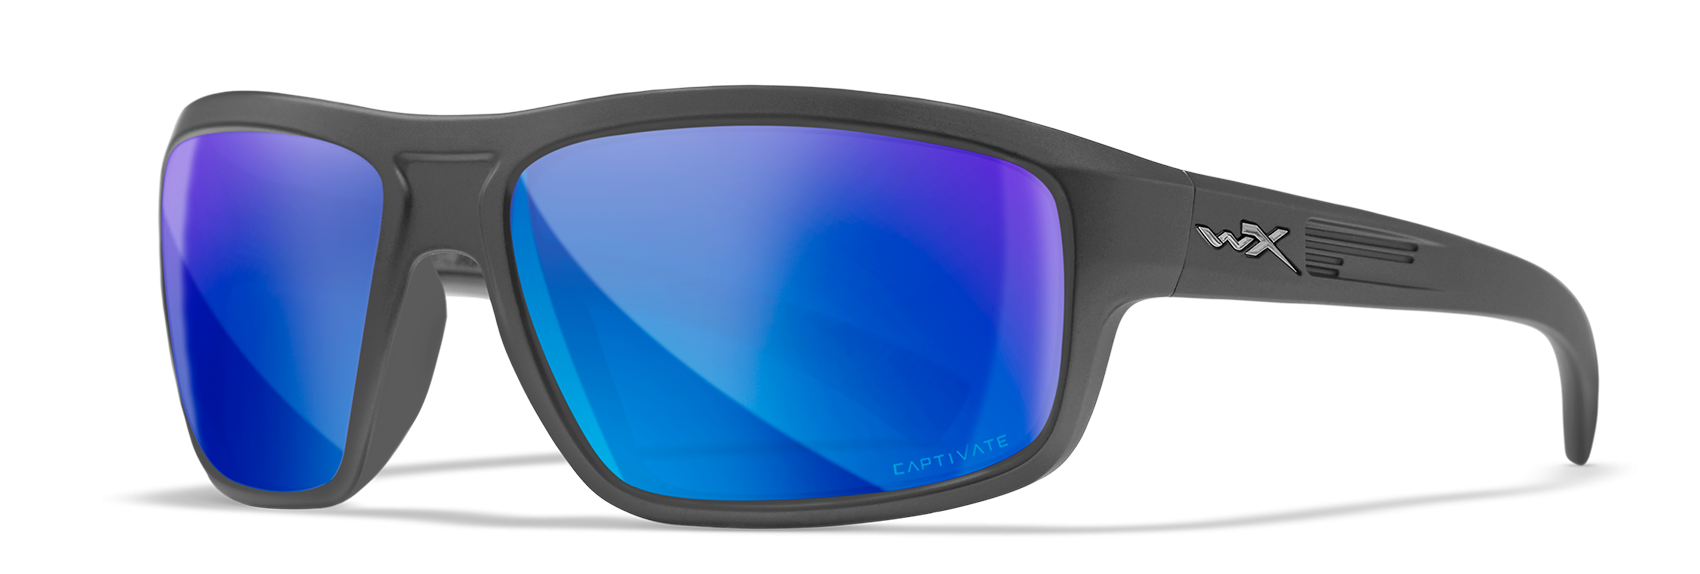 Wiley X WX Contend Matte Graphite Polycarbonate Sunglasses